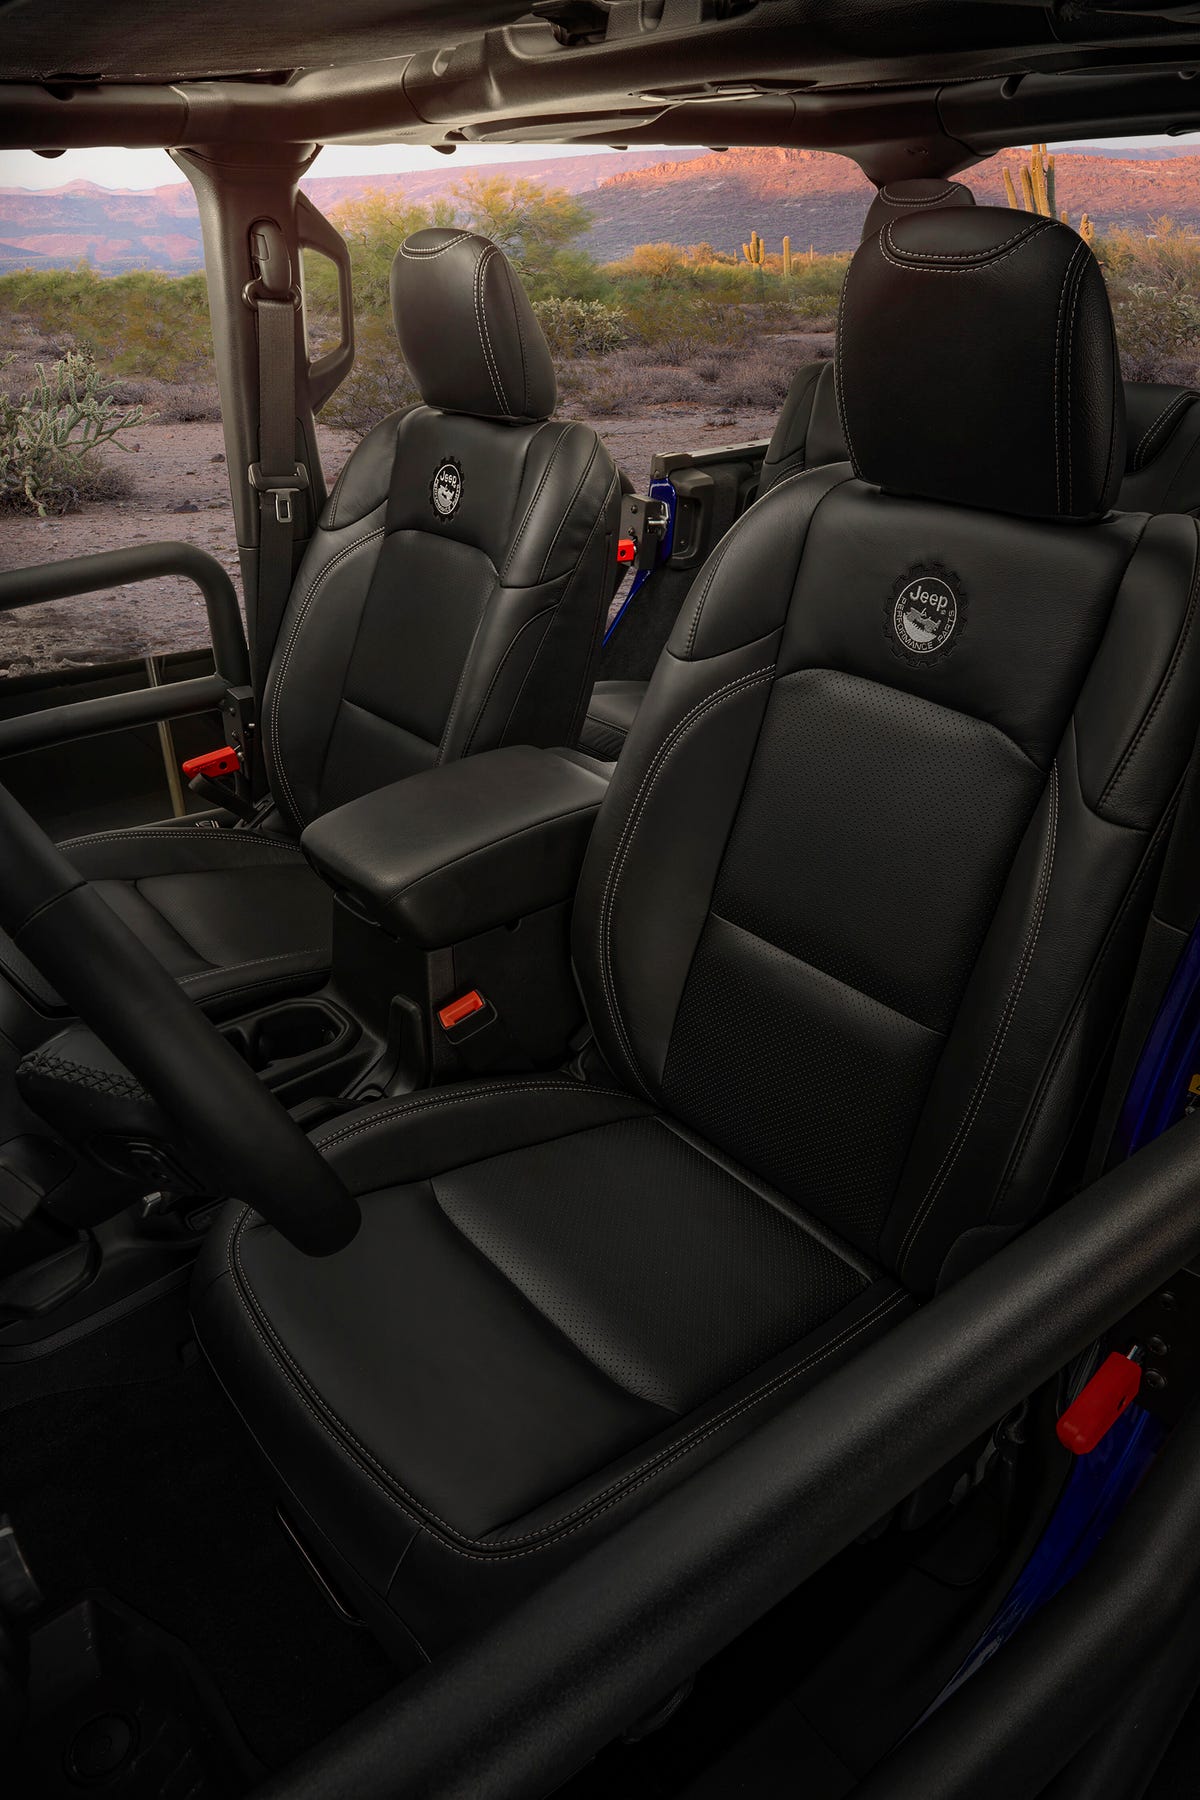 2020 Jeep Wrangler JPP limited edition